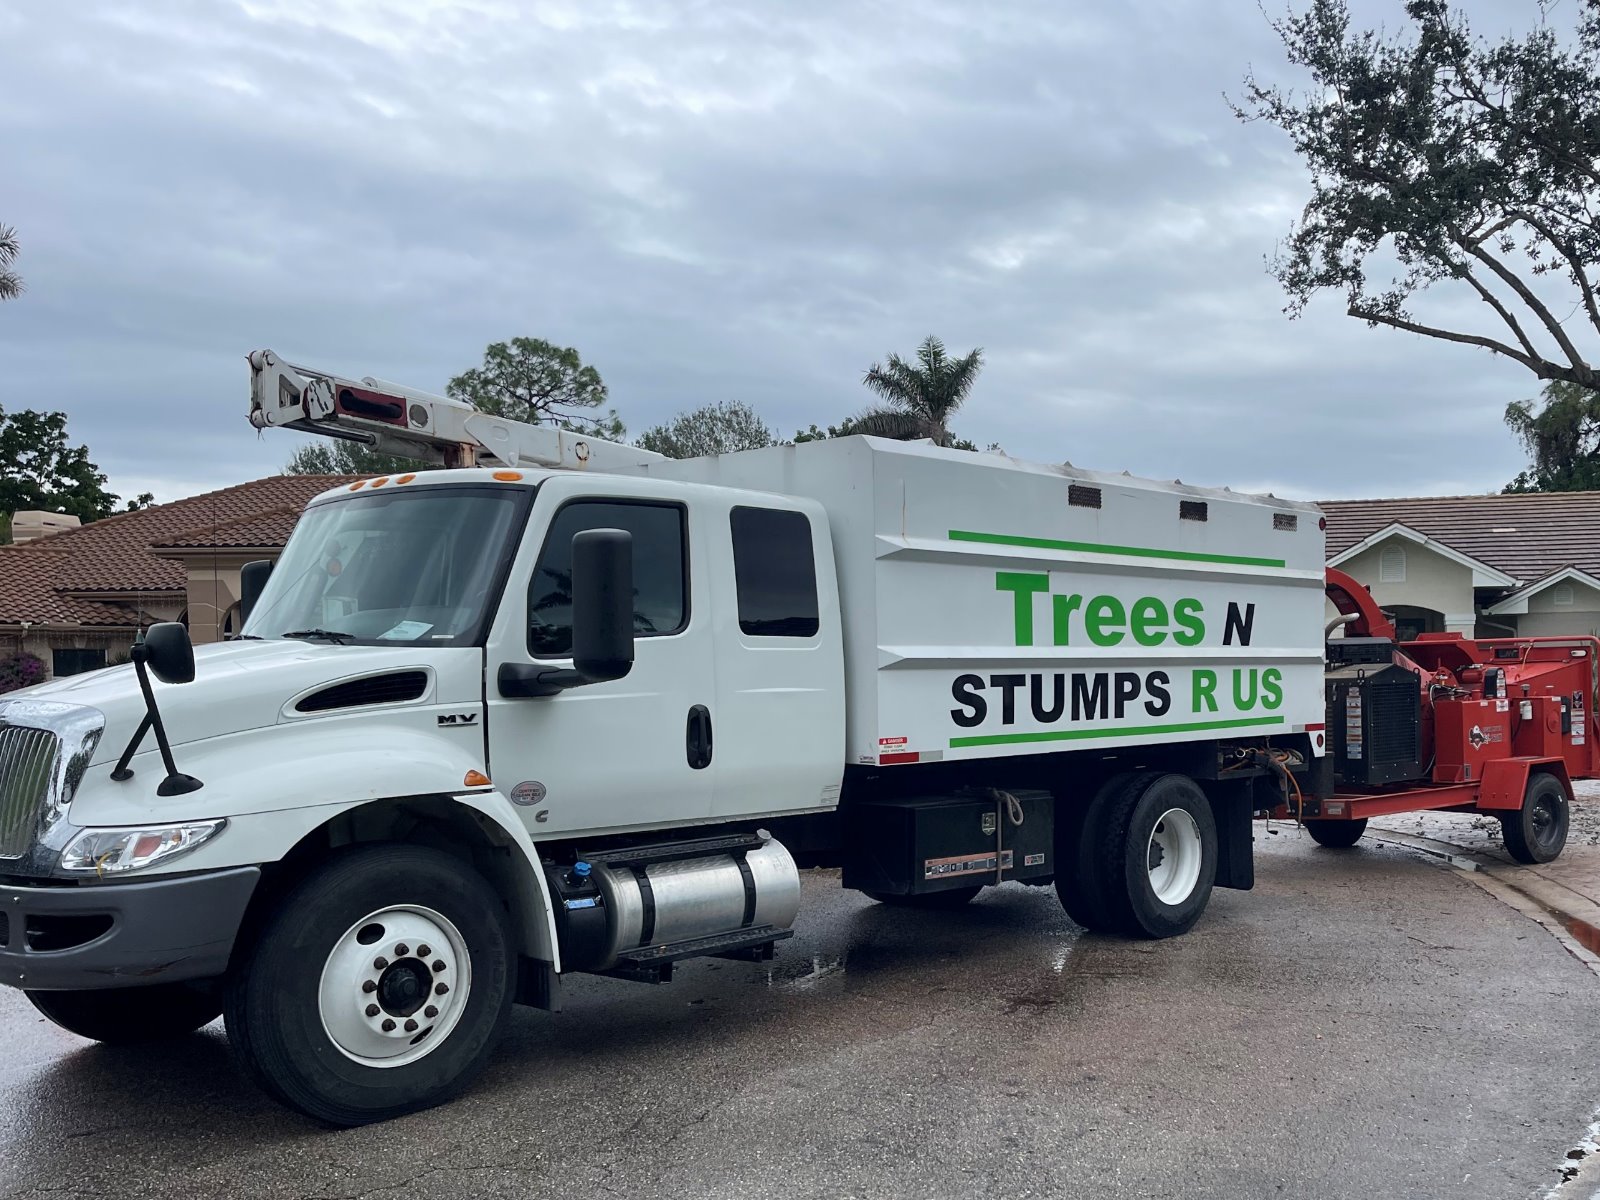 Experienced Naples, FL tree trimming company.